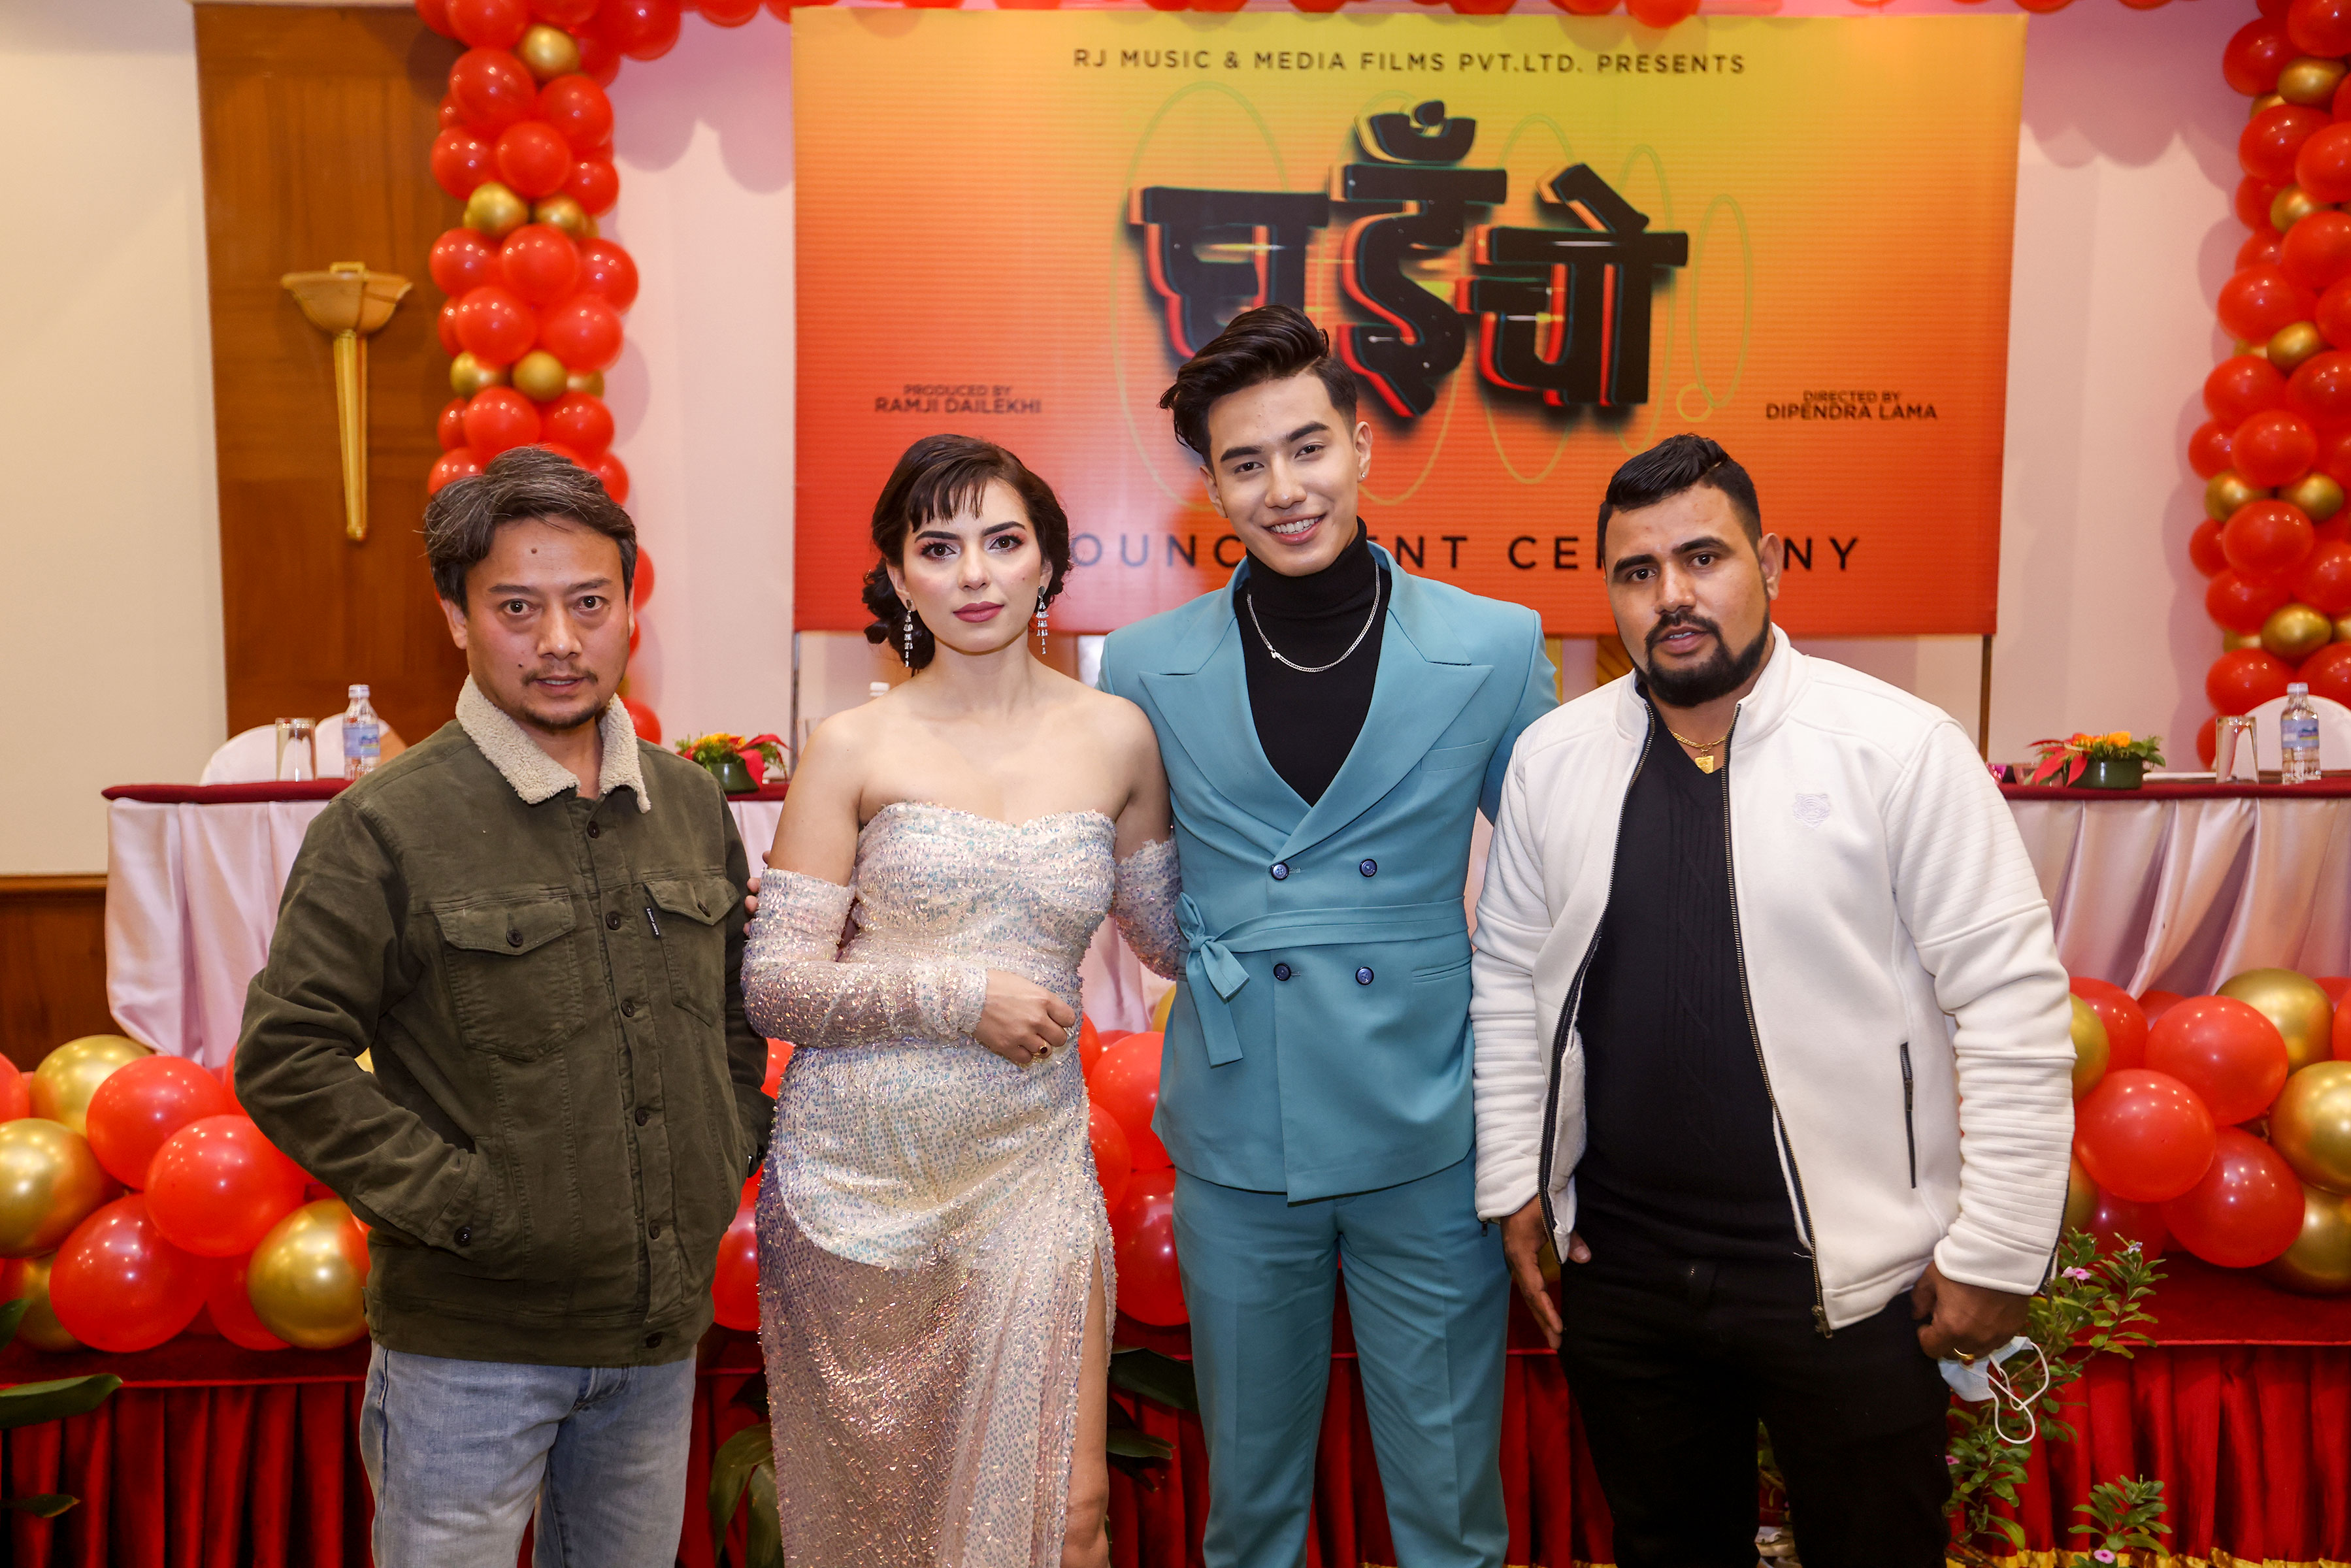 Dipendra Lama's directorial 'Ghuincho' announced